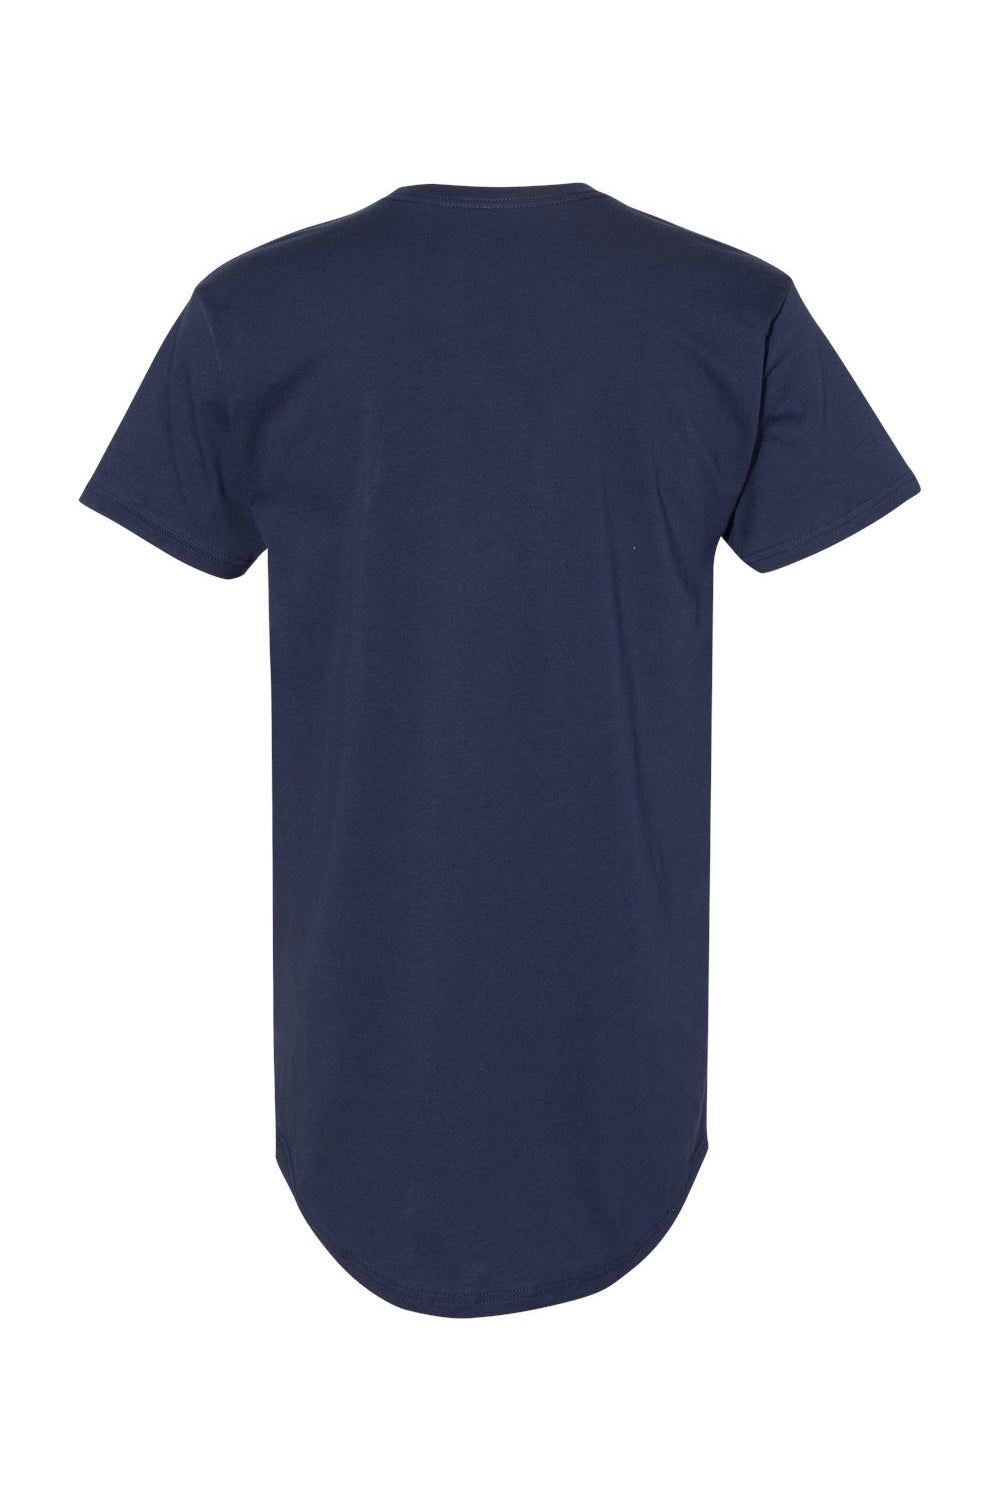 Bella + Canvas 3006 Mens Long Body Urban Short Sleeve Crewneck T-Shirt Navy Blue Flat Back